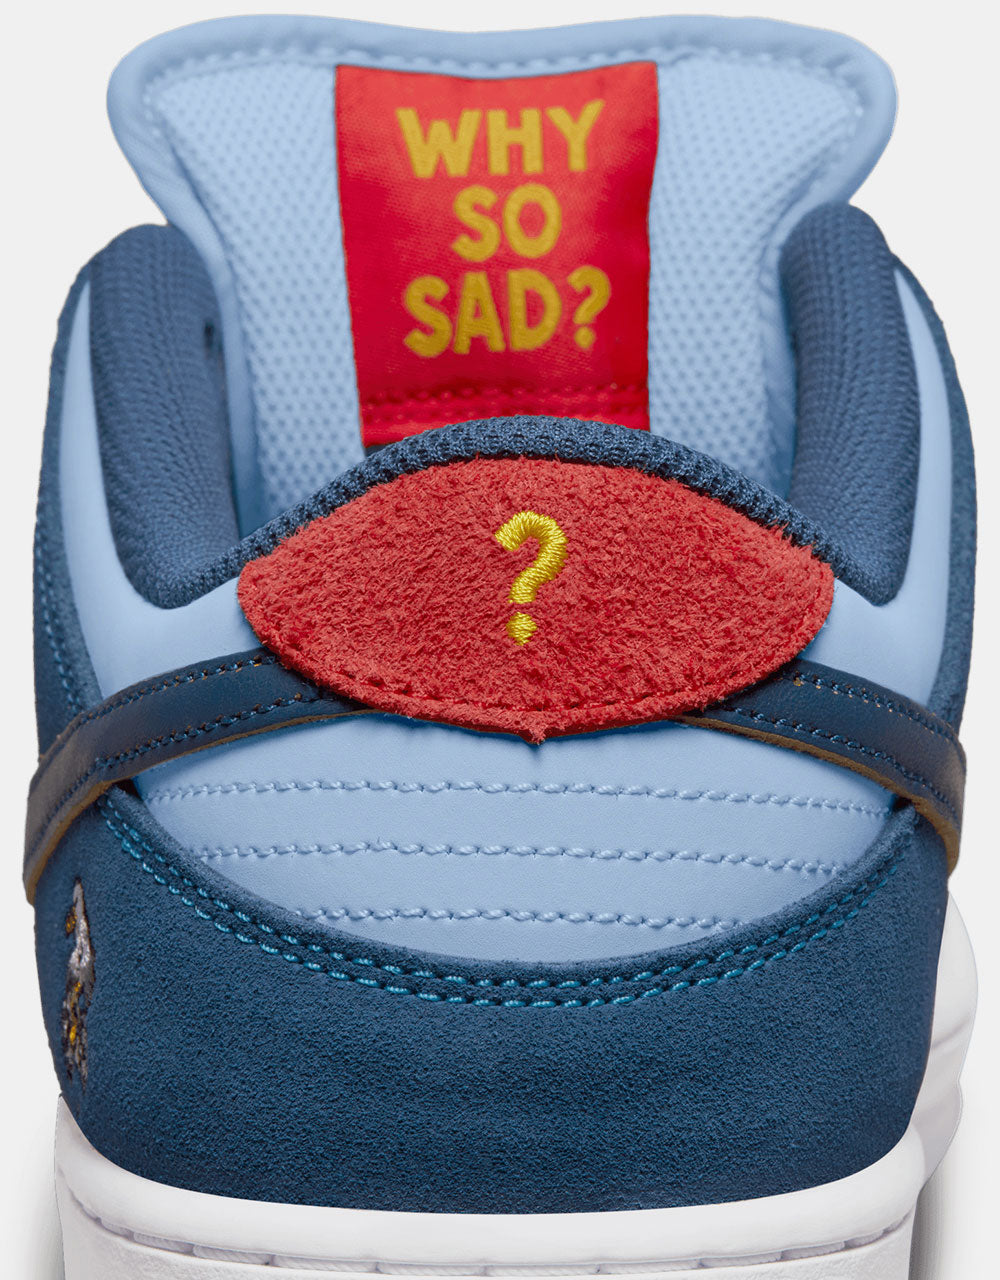 Nike SB x Why So Sad? Dunk Low Skate Shoes